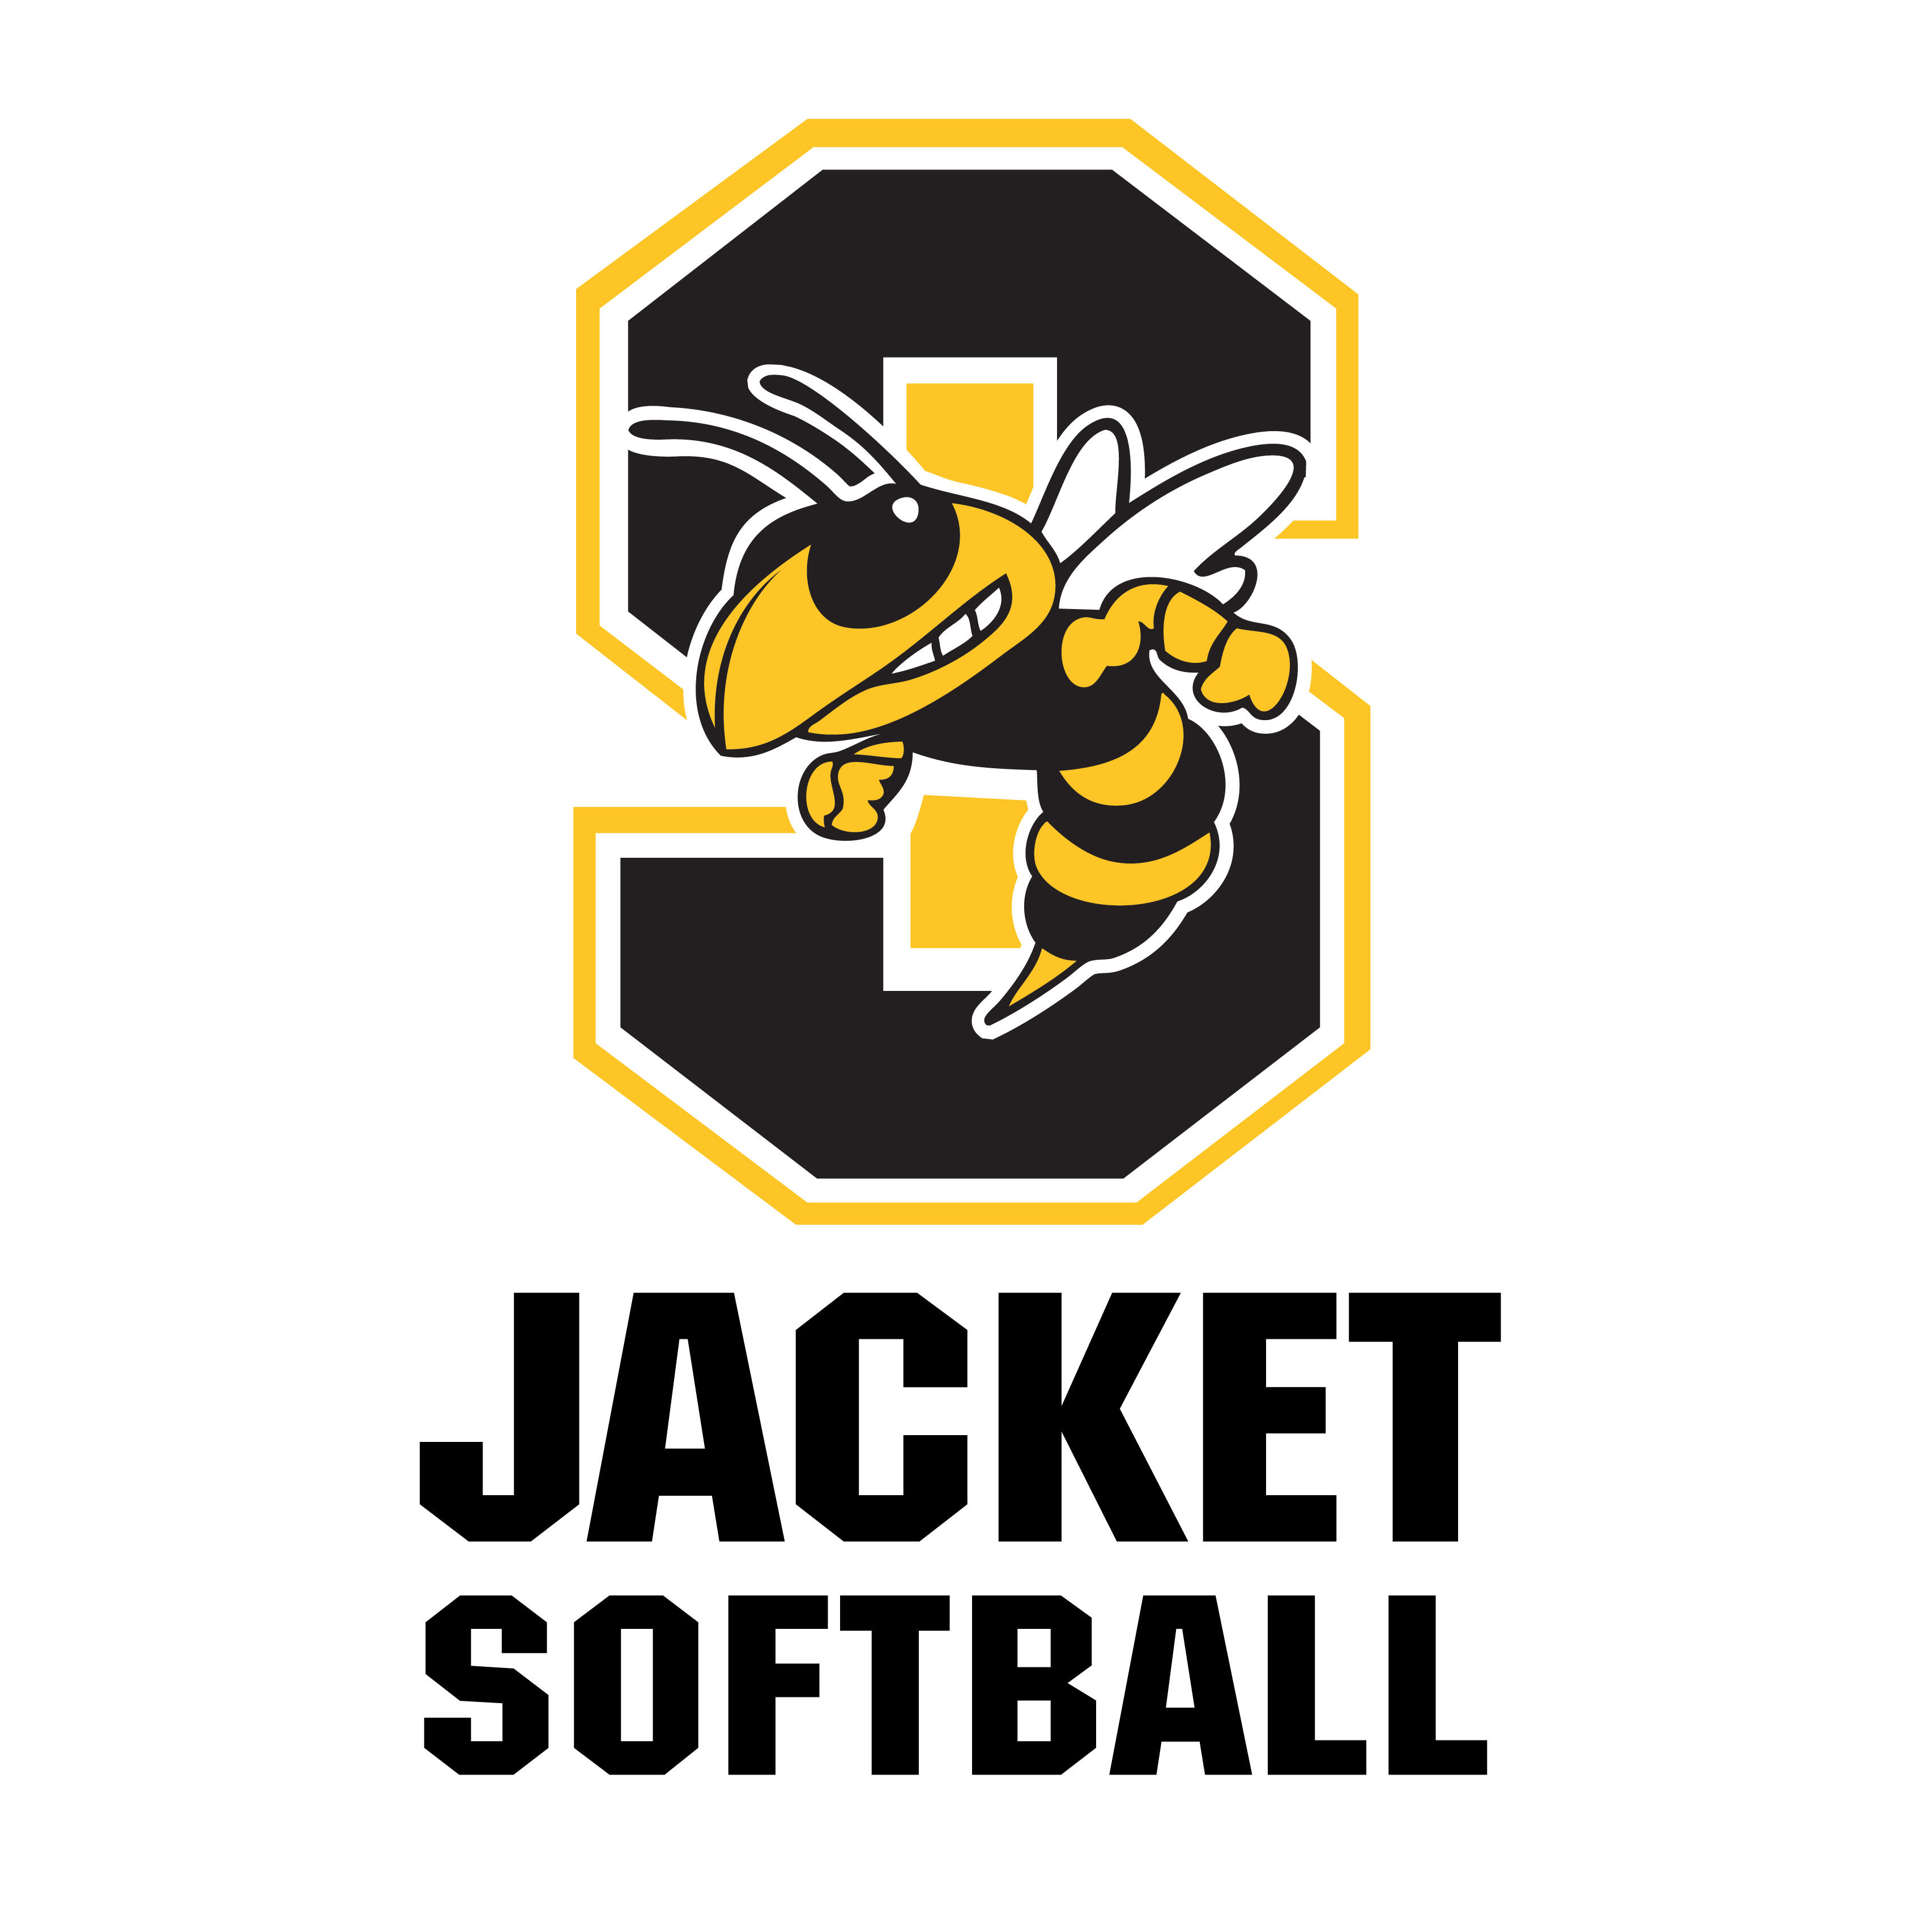 Jacket Softball logo